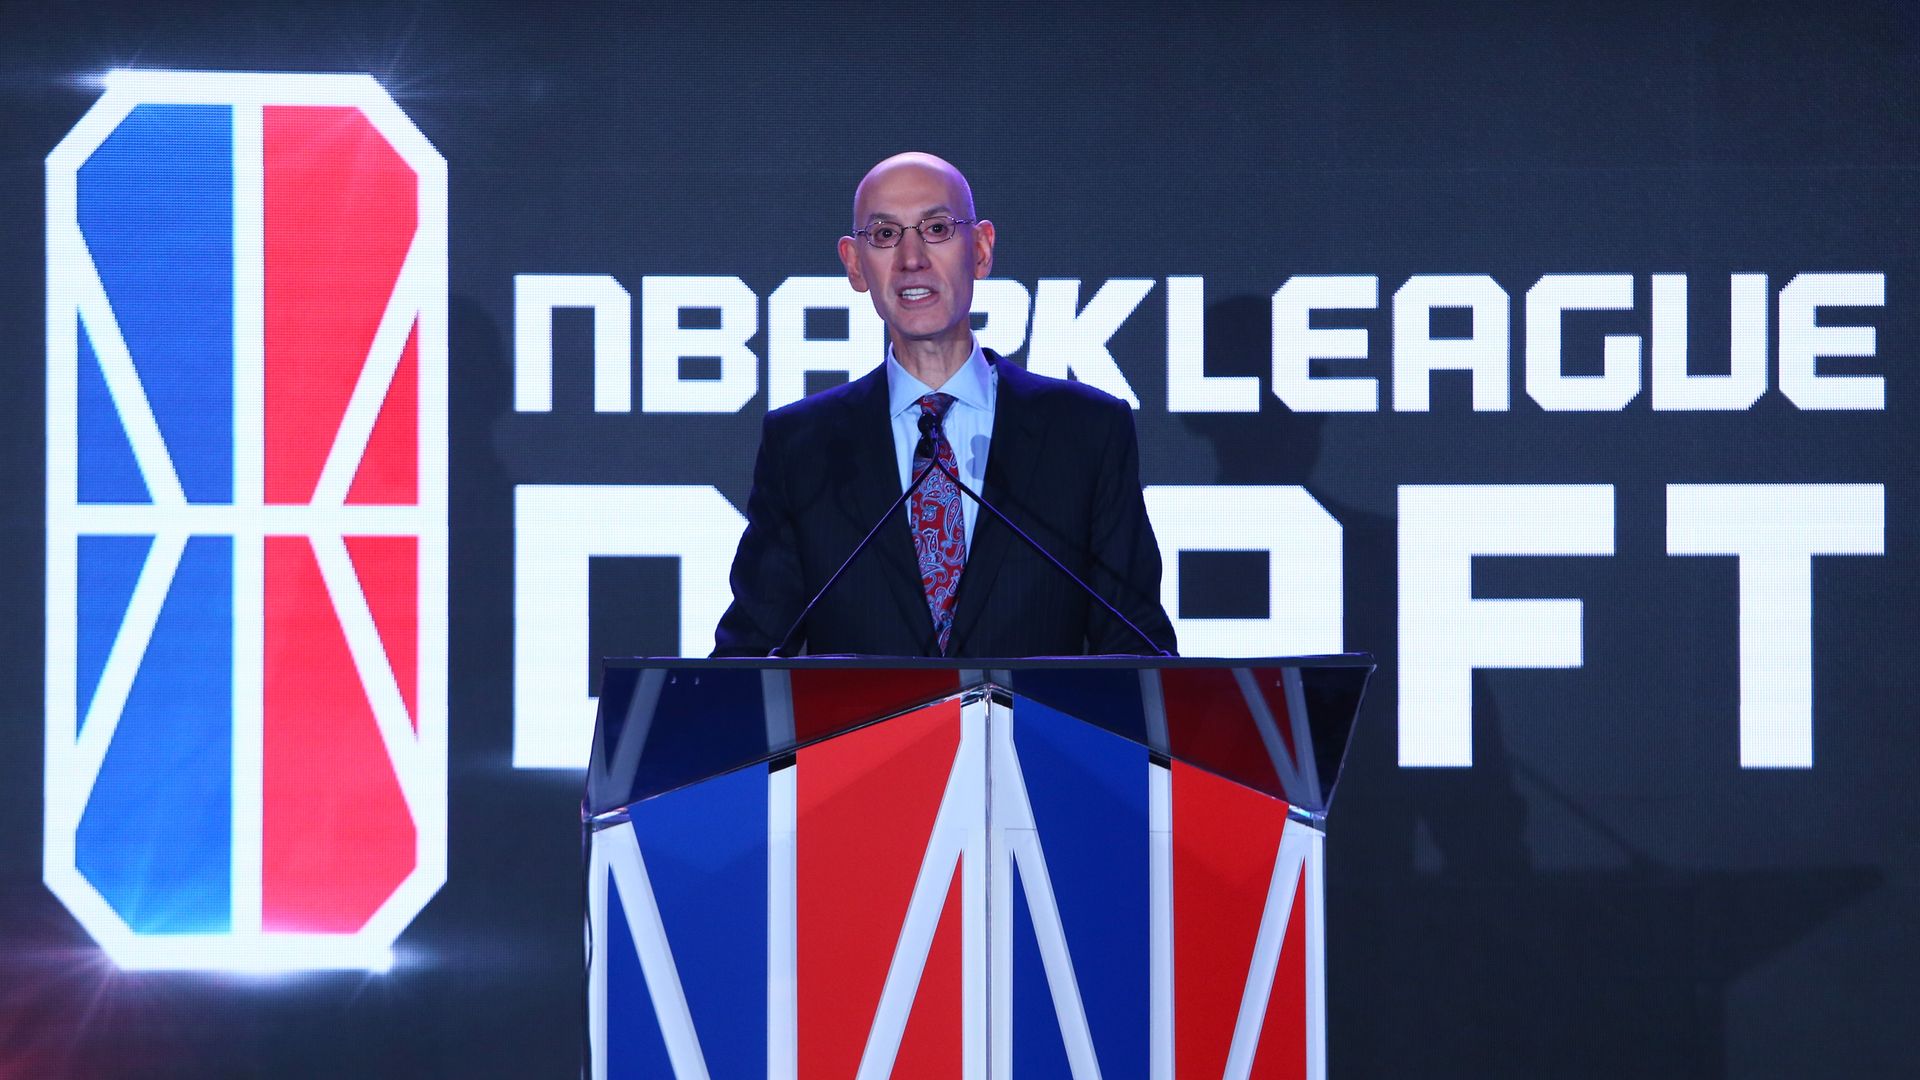 NBA Commissioner Adam Silver at the NBA 2k league draft